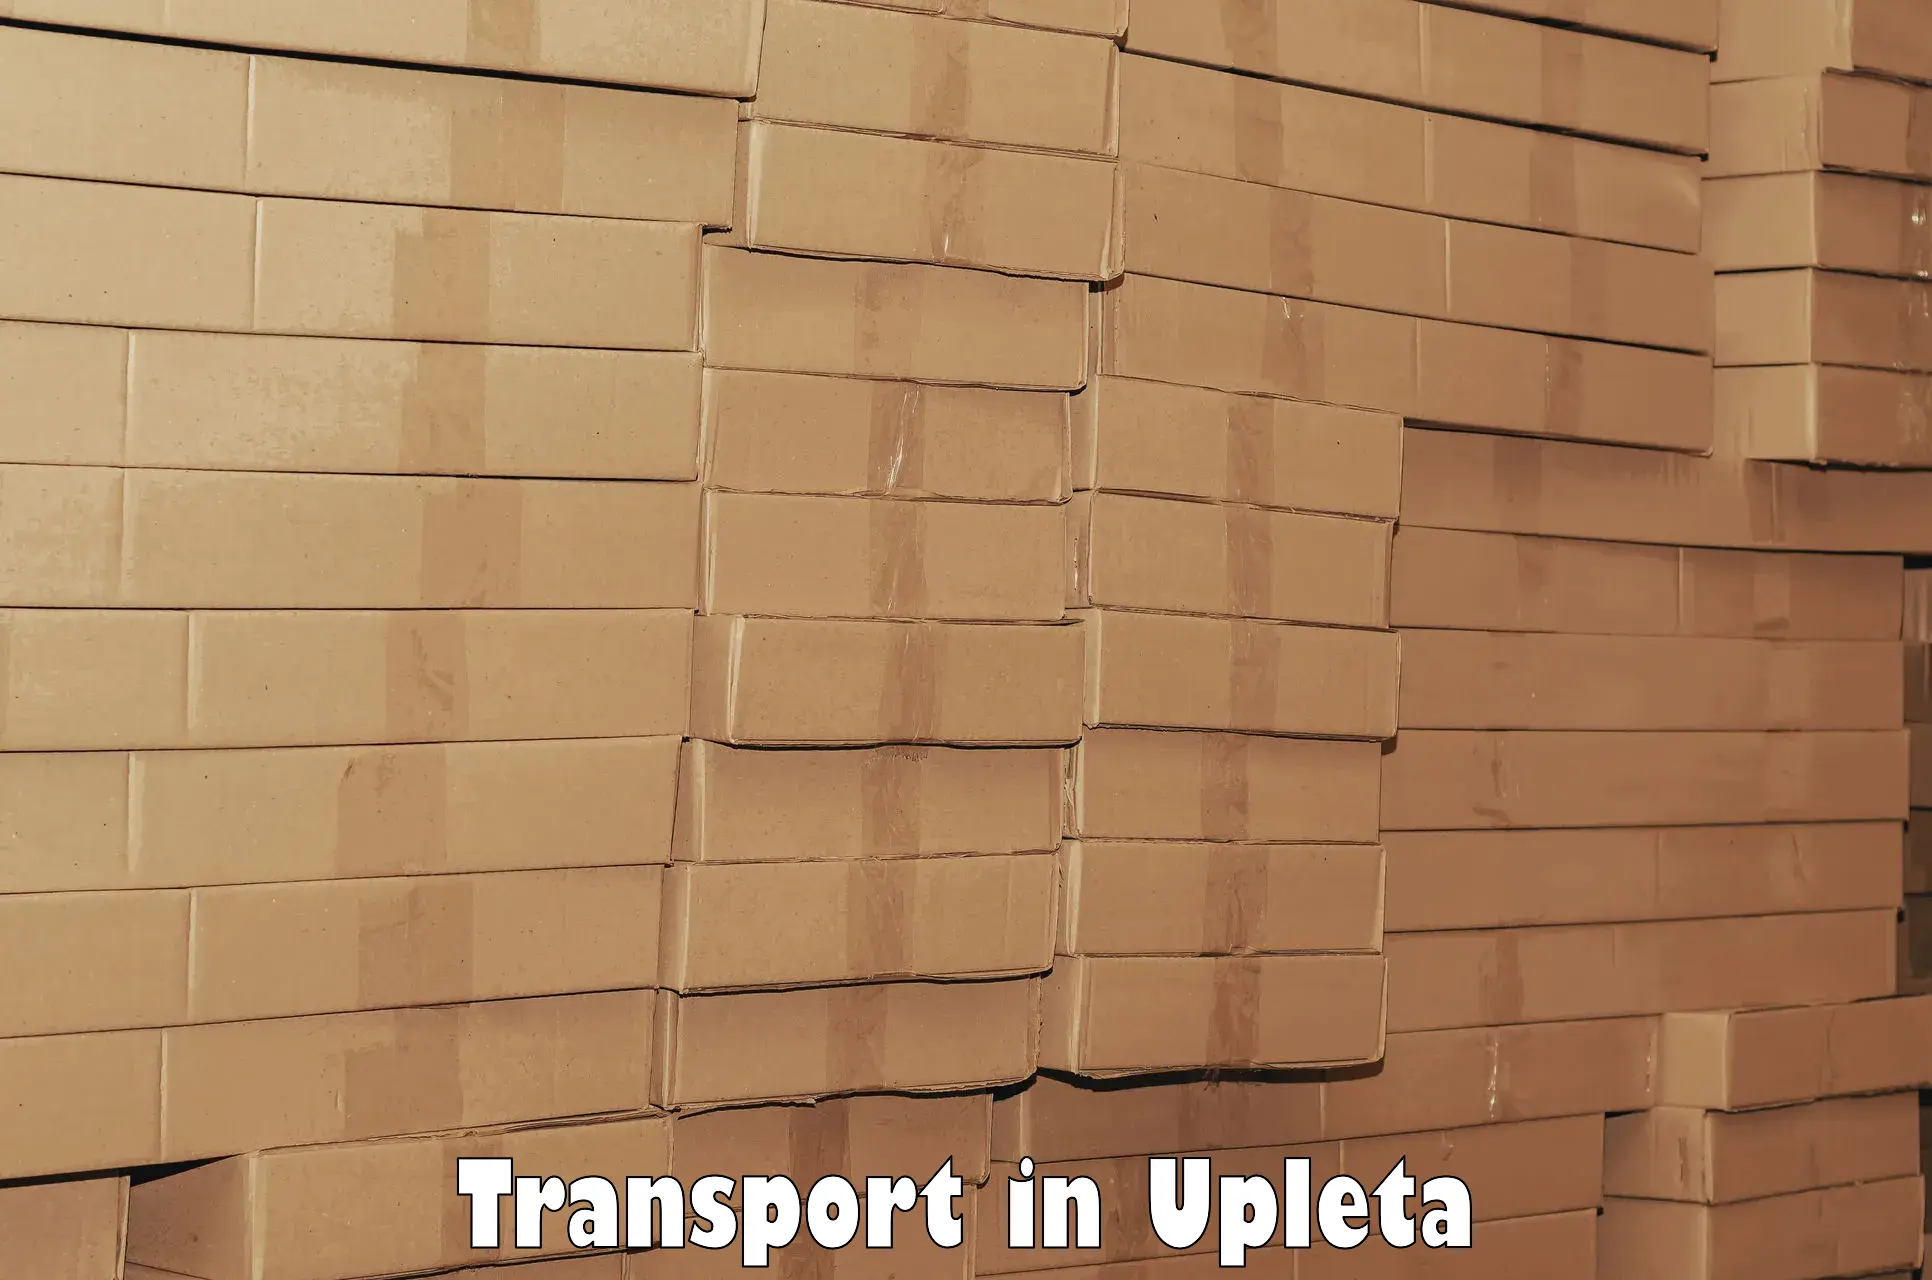 Sending bike to another city in Upleta